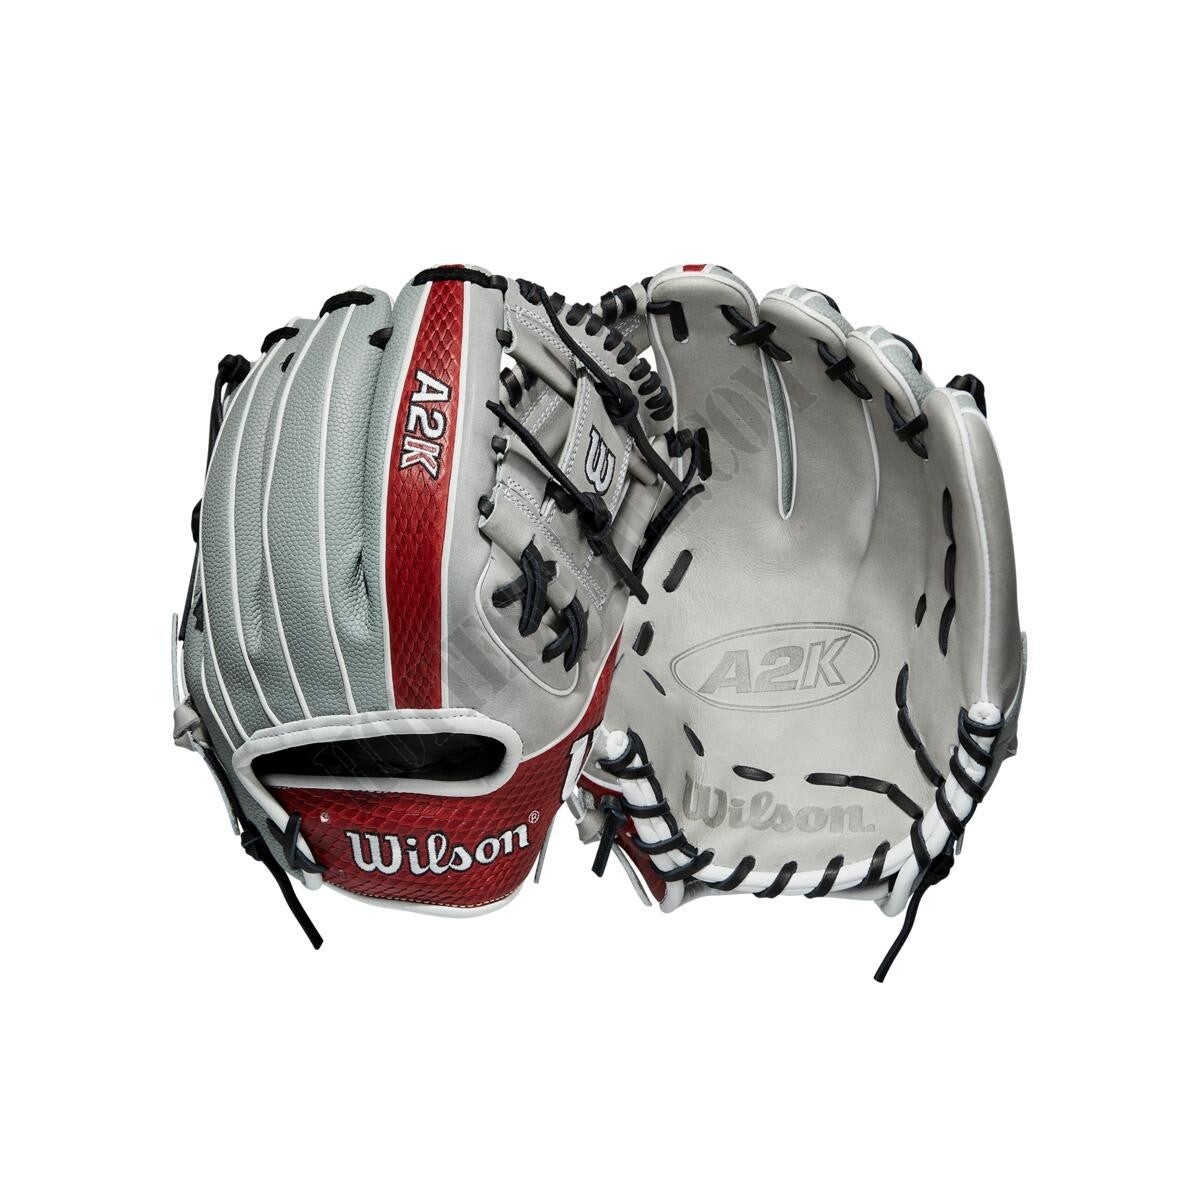 2021 A2K 1786SS 11.5" Infield Baseball Glove - Limited Edition ● Wilson Promotions - 2021 A2K 1786SS 11.5" Infield Baseball Glove - Limited Edition ● Wilson Promotions